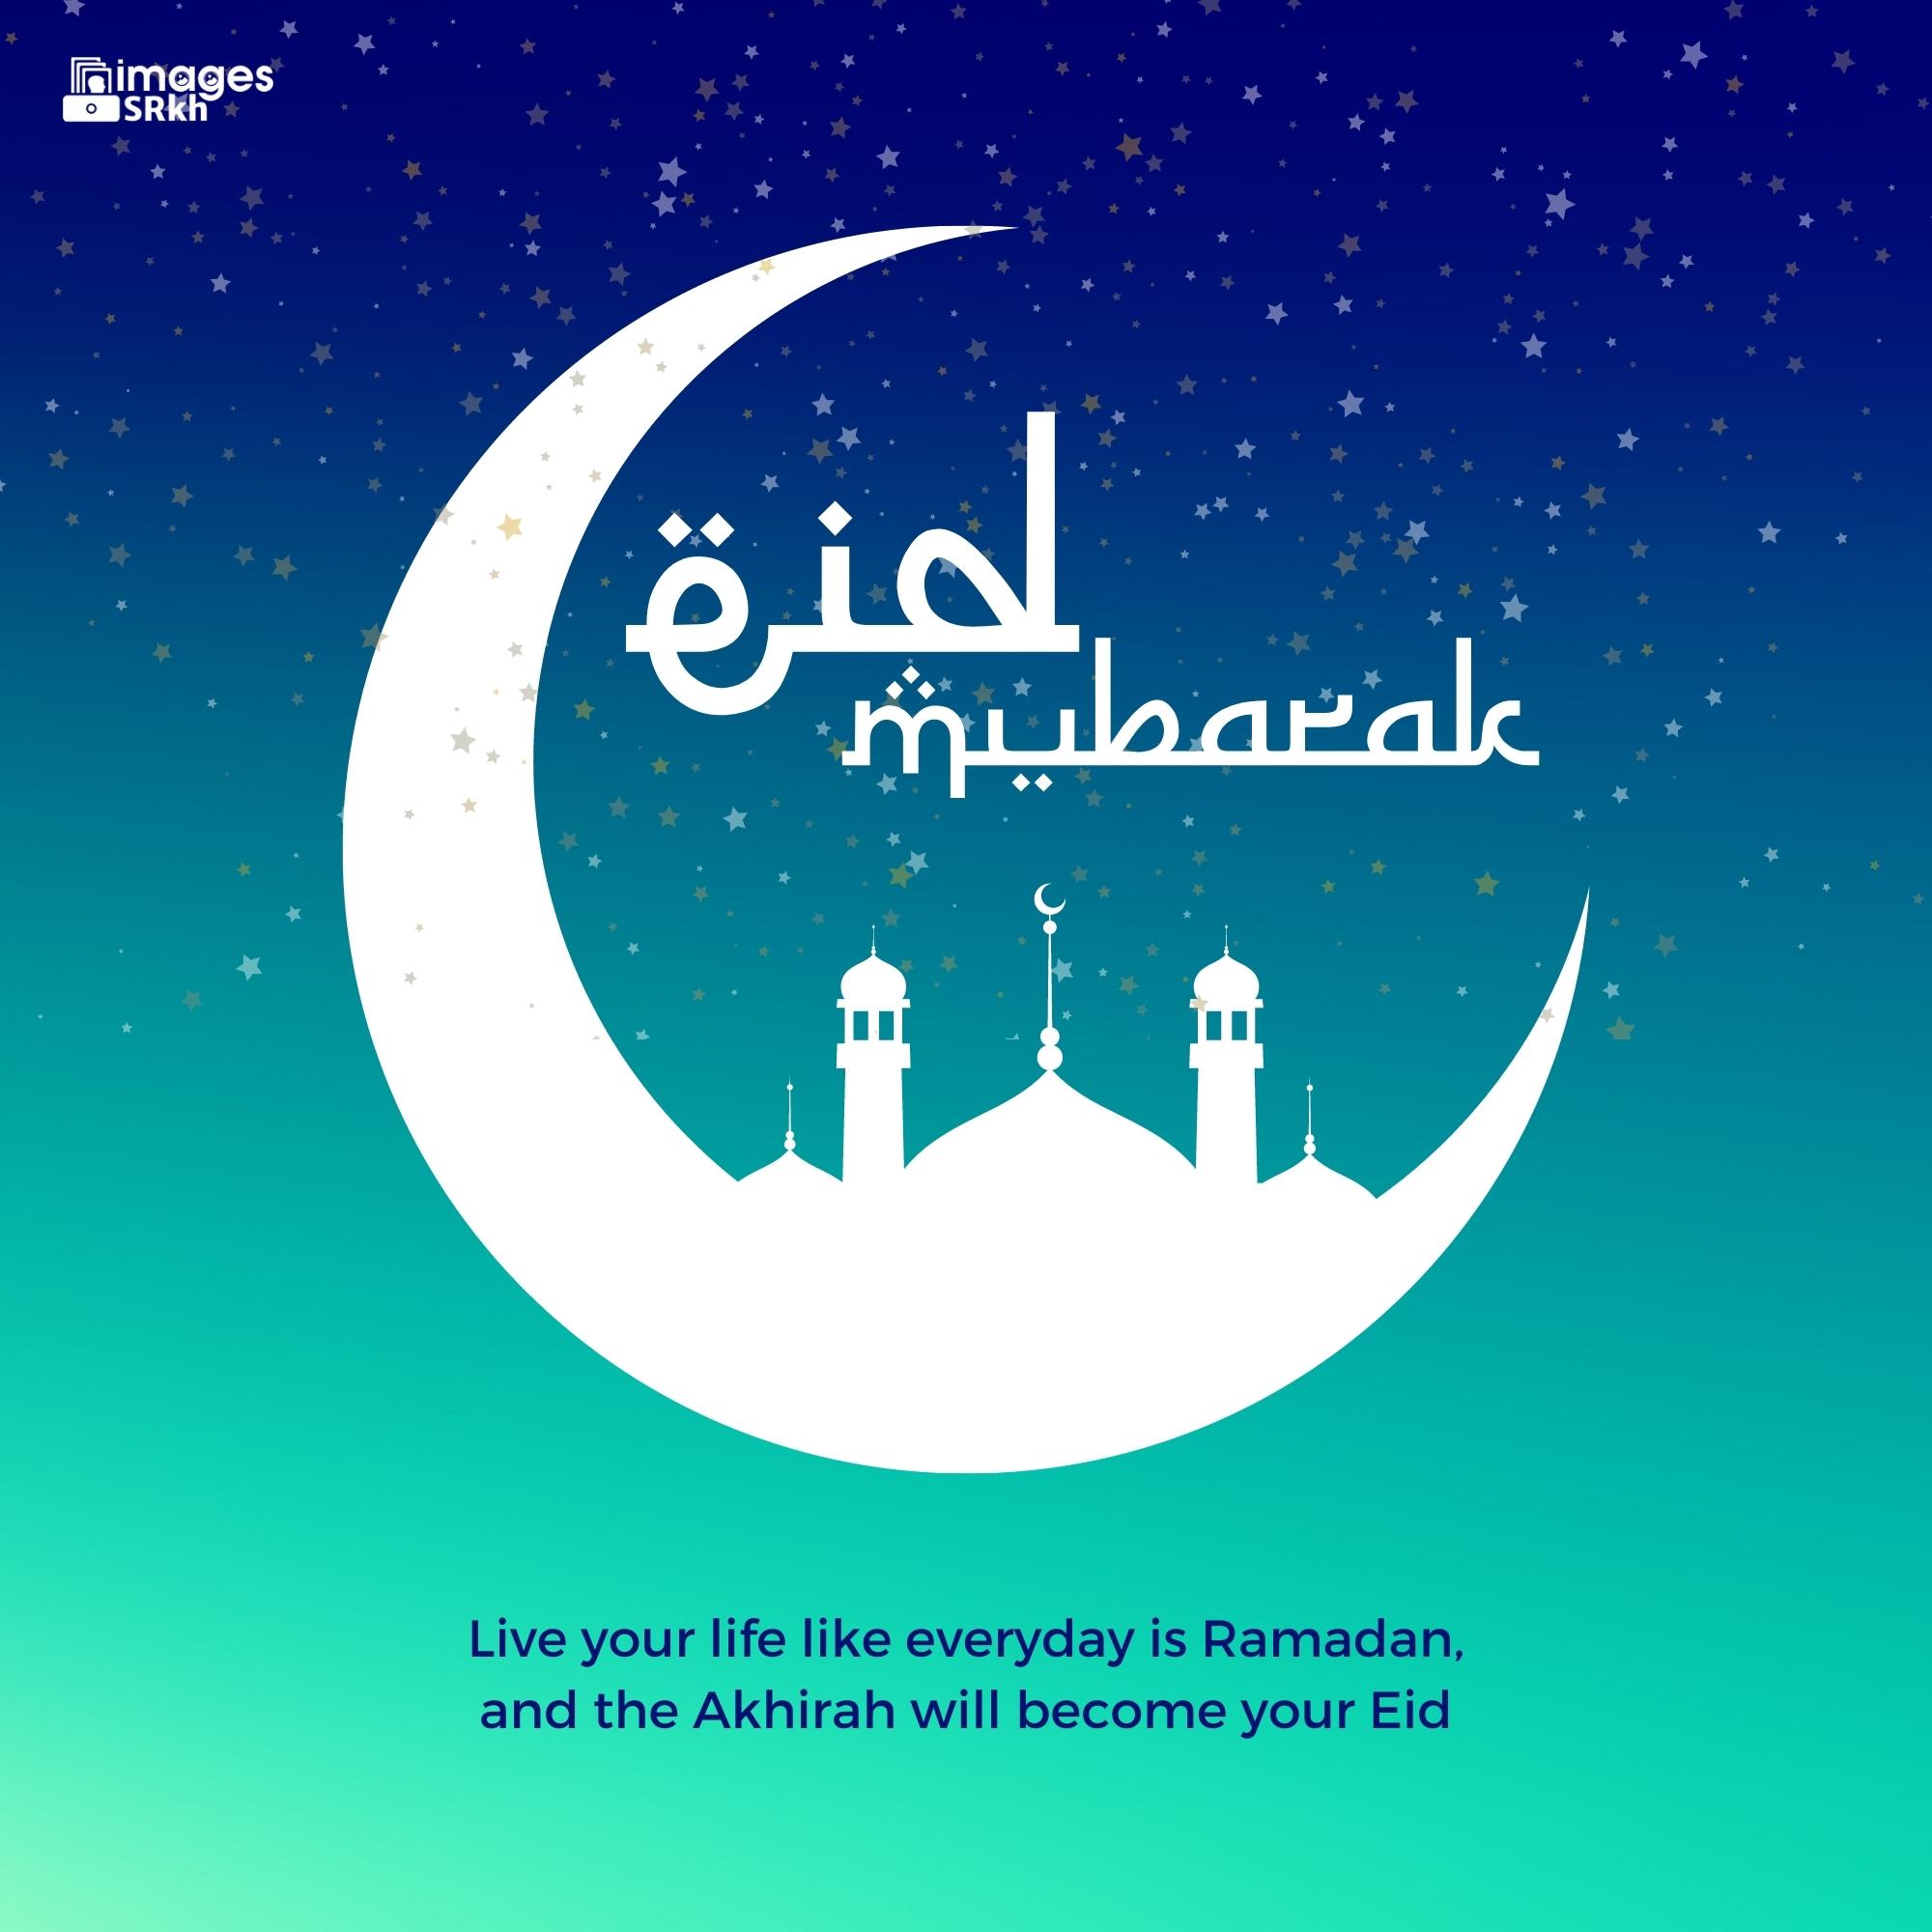 Happy Eid Mubarak | Download free in Hd Quality | imagesSRkh